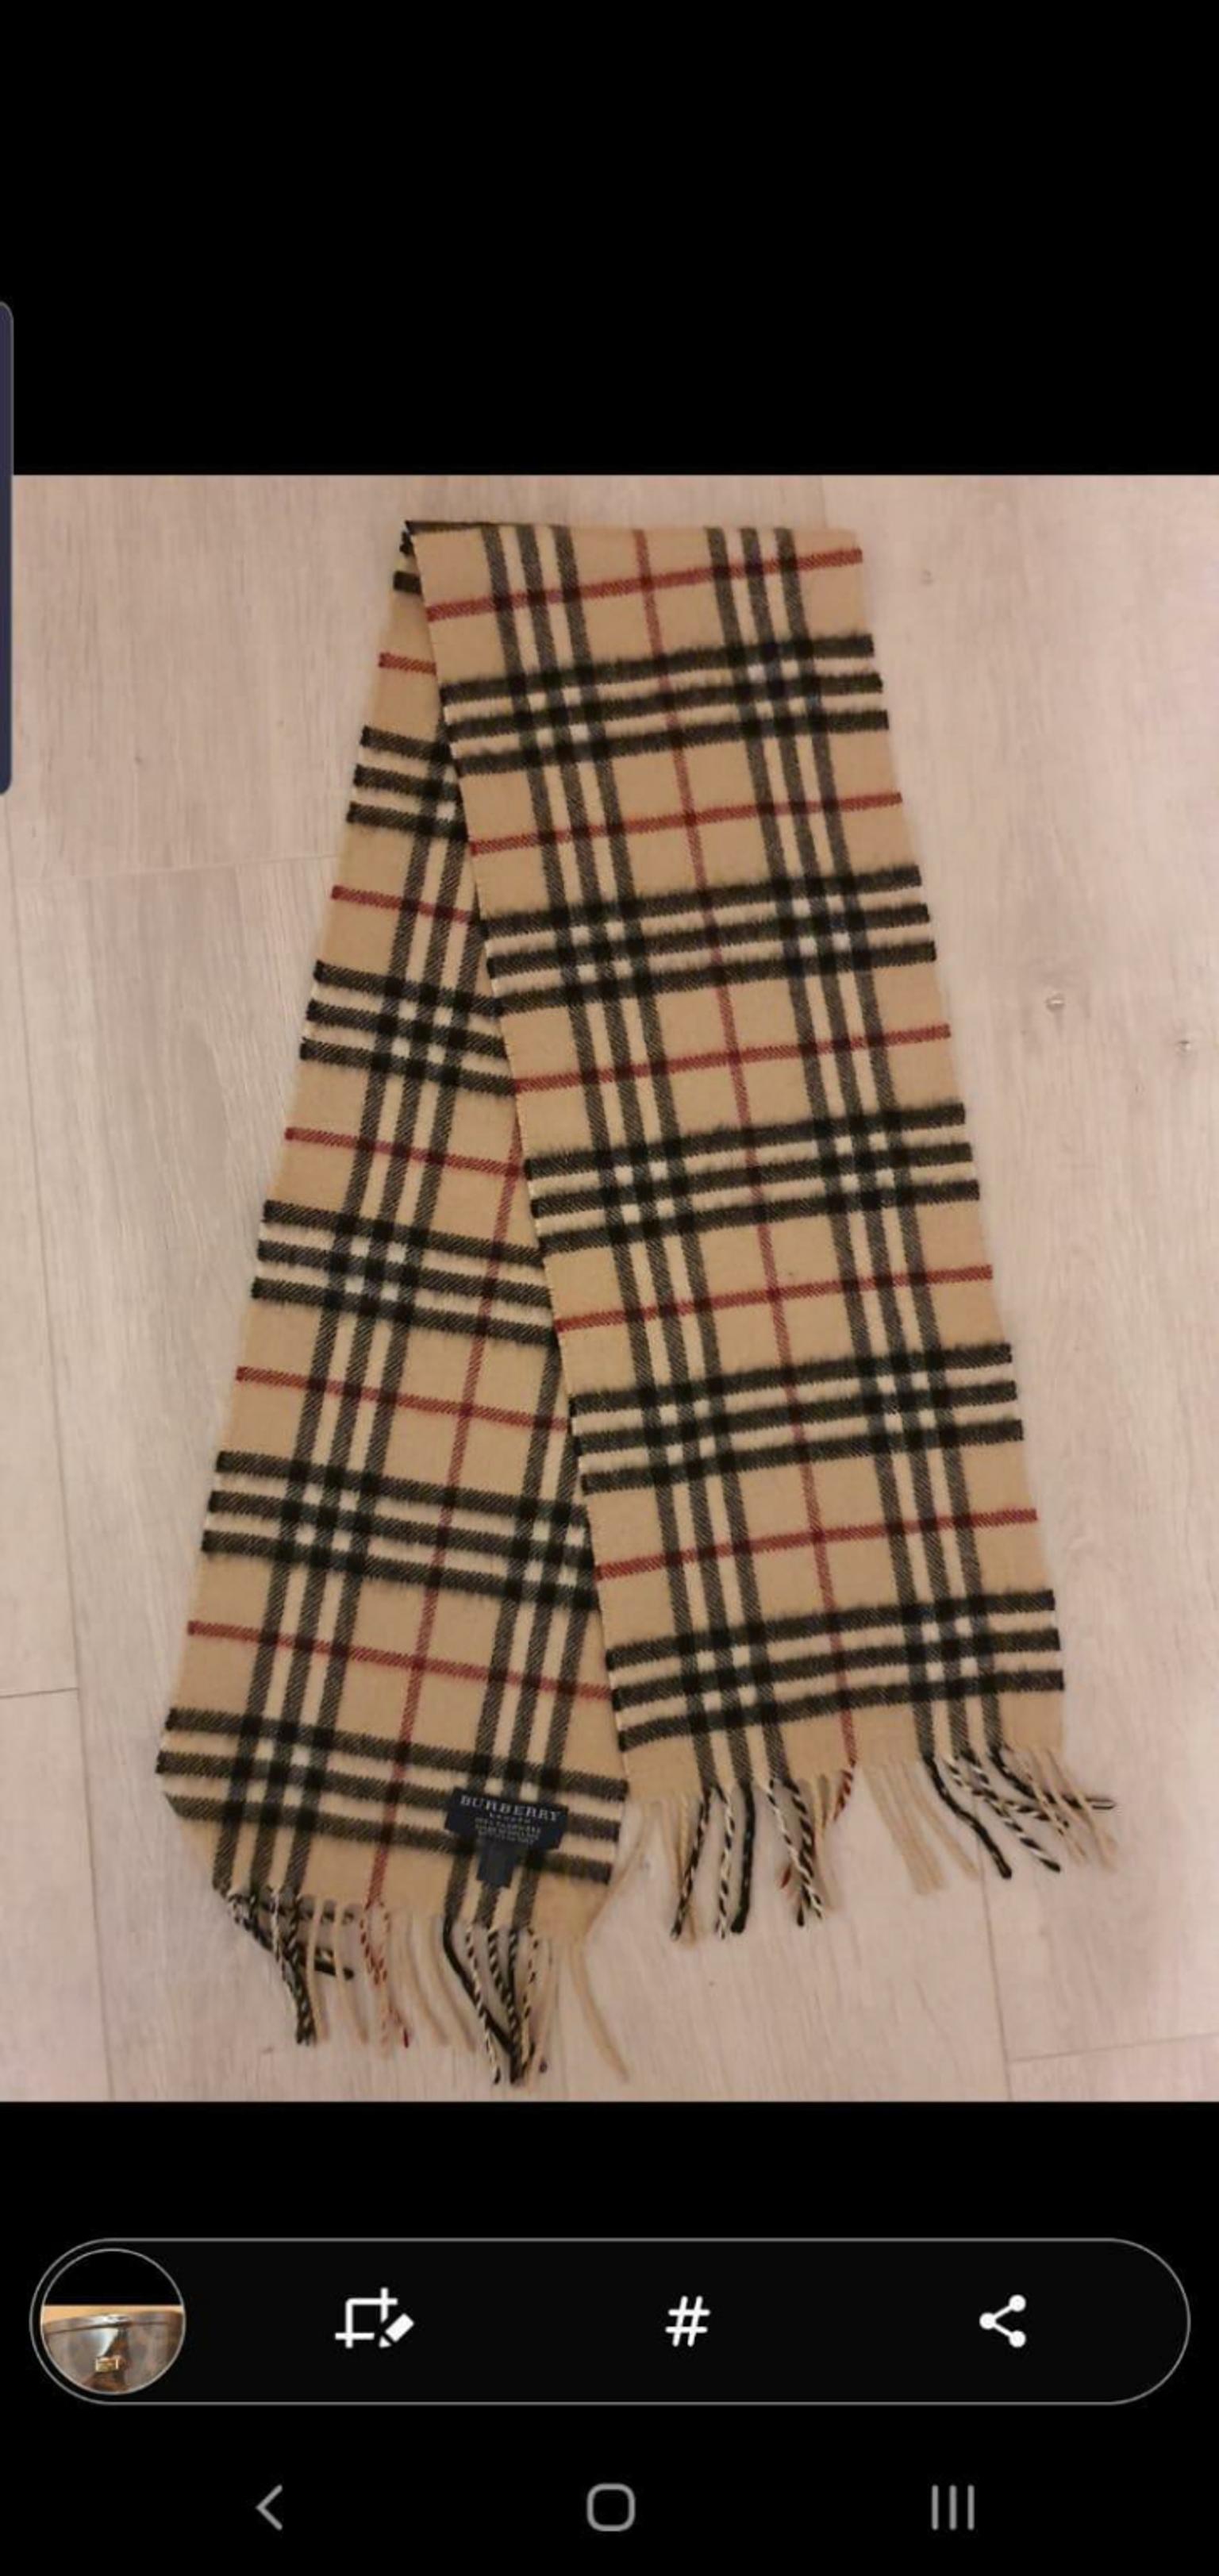 burberry scarf size